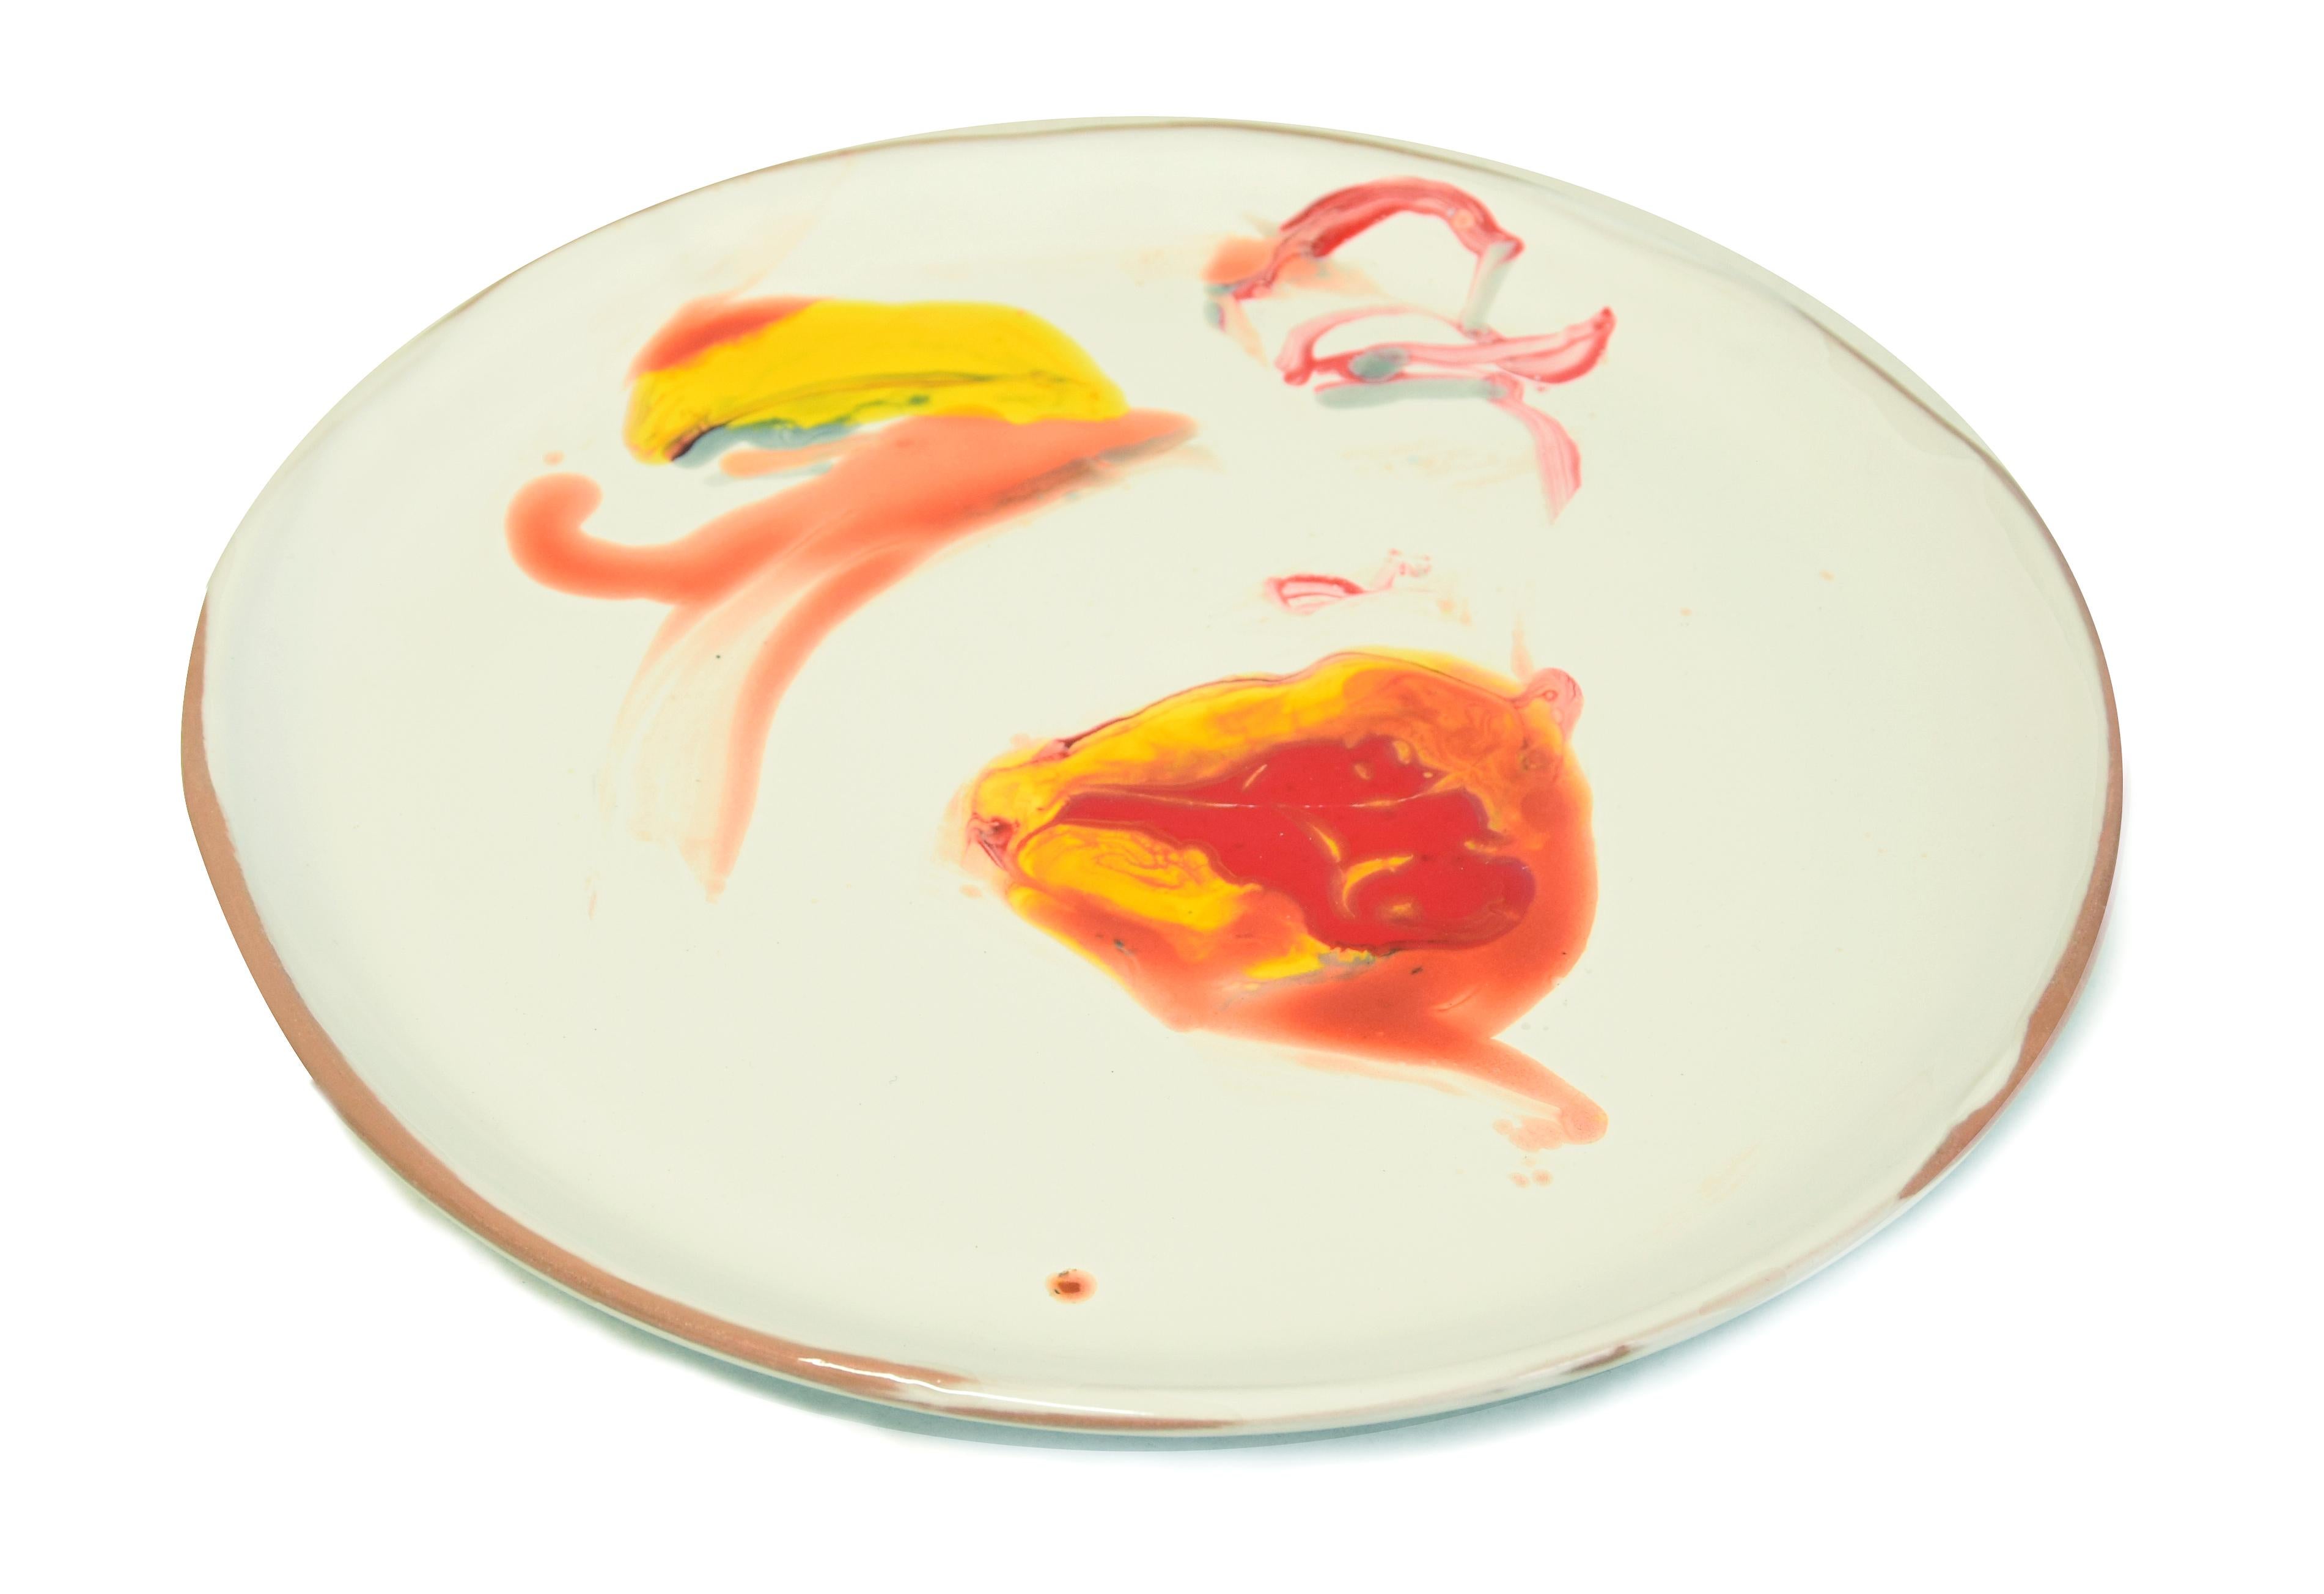 Sight - Hand-made Flat Ceramic Dish by A. Kurakina - 2019 - Art by Anastasia Kurakina